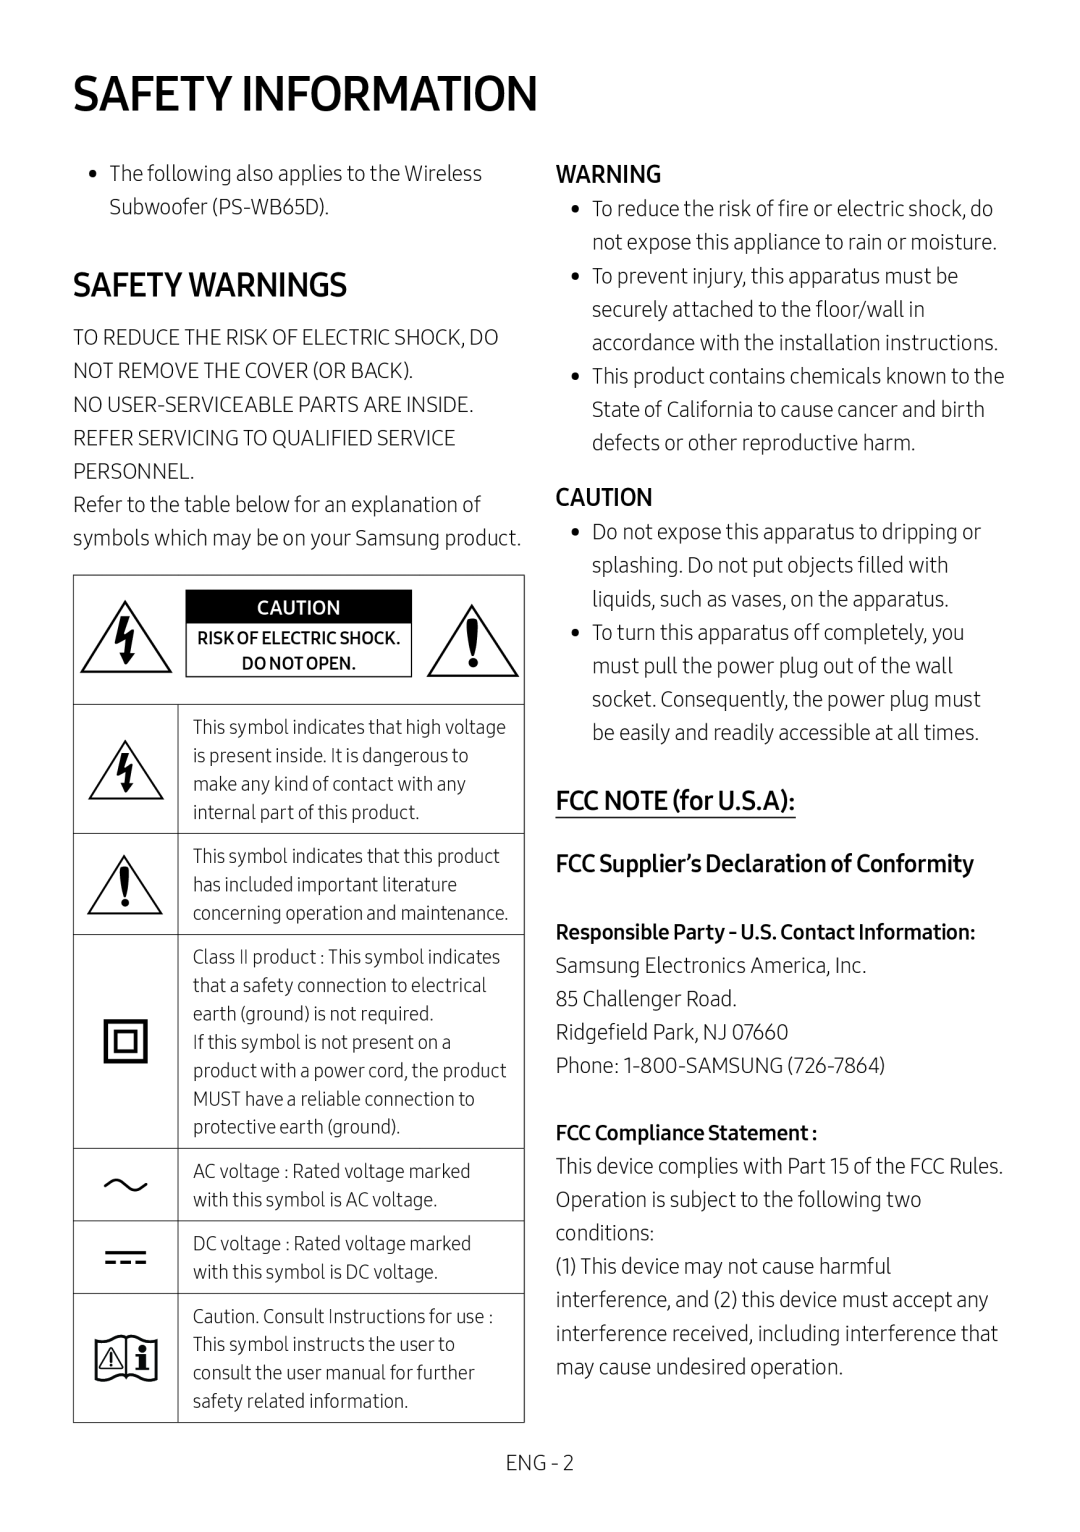 SAFETY WARNINGS Standard HW-B550